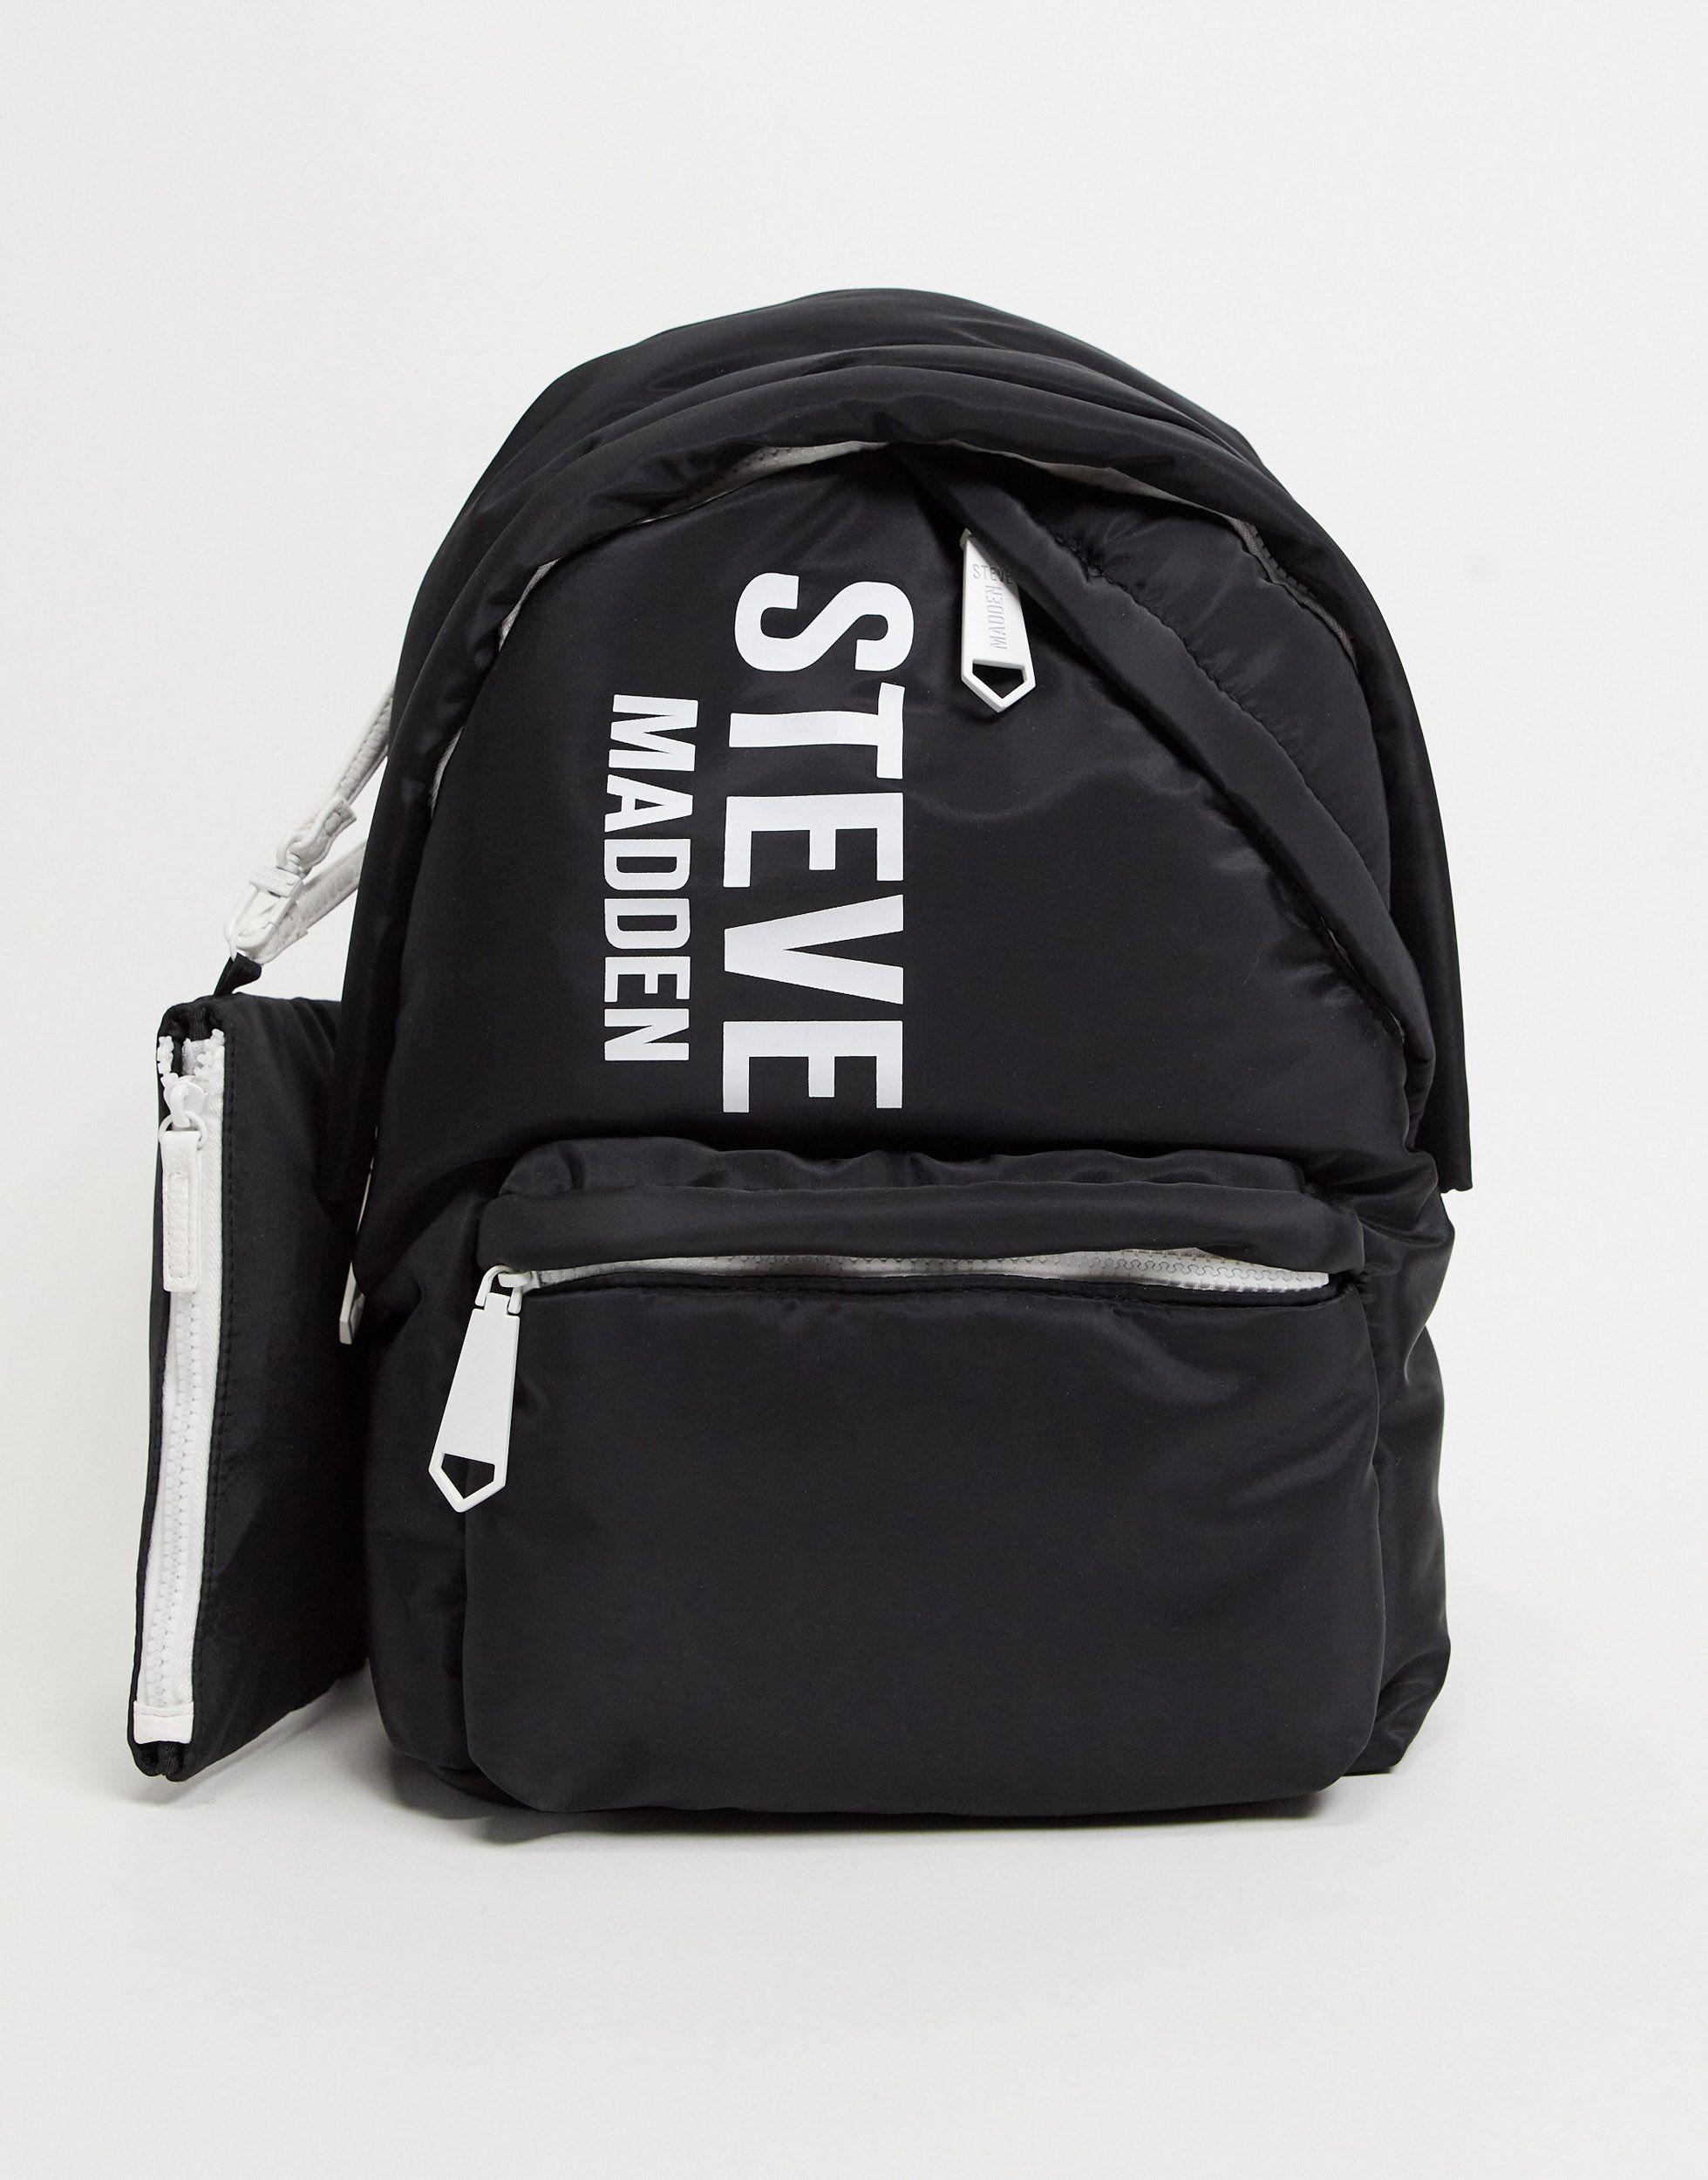 Steve Madden Nepal Logo Backpack With Wristlet in Black - Lyst